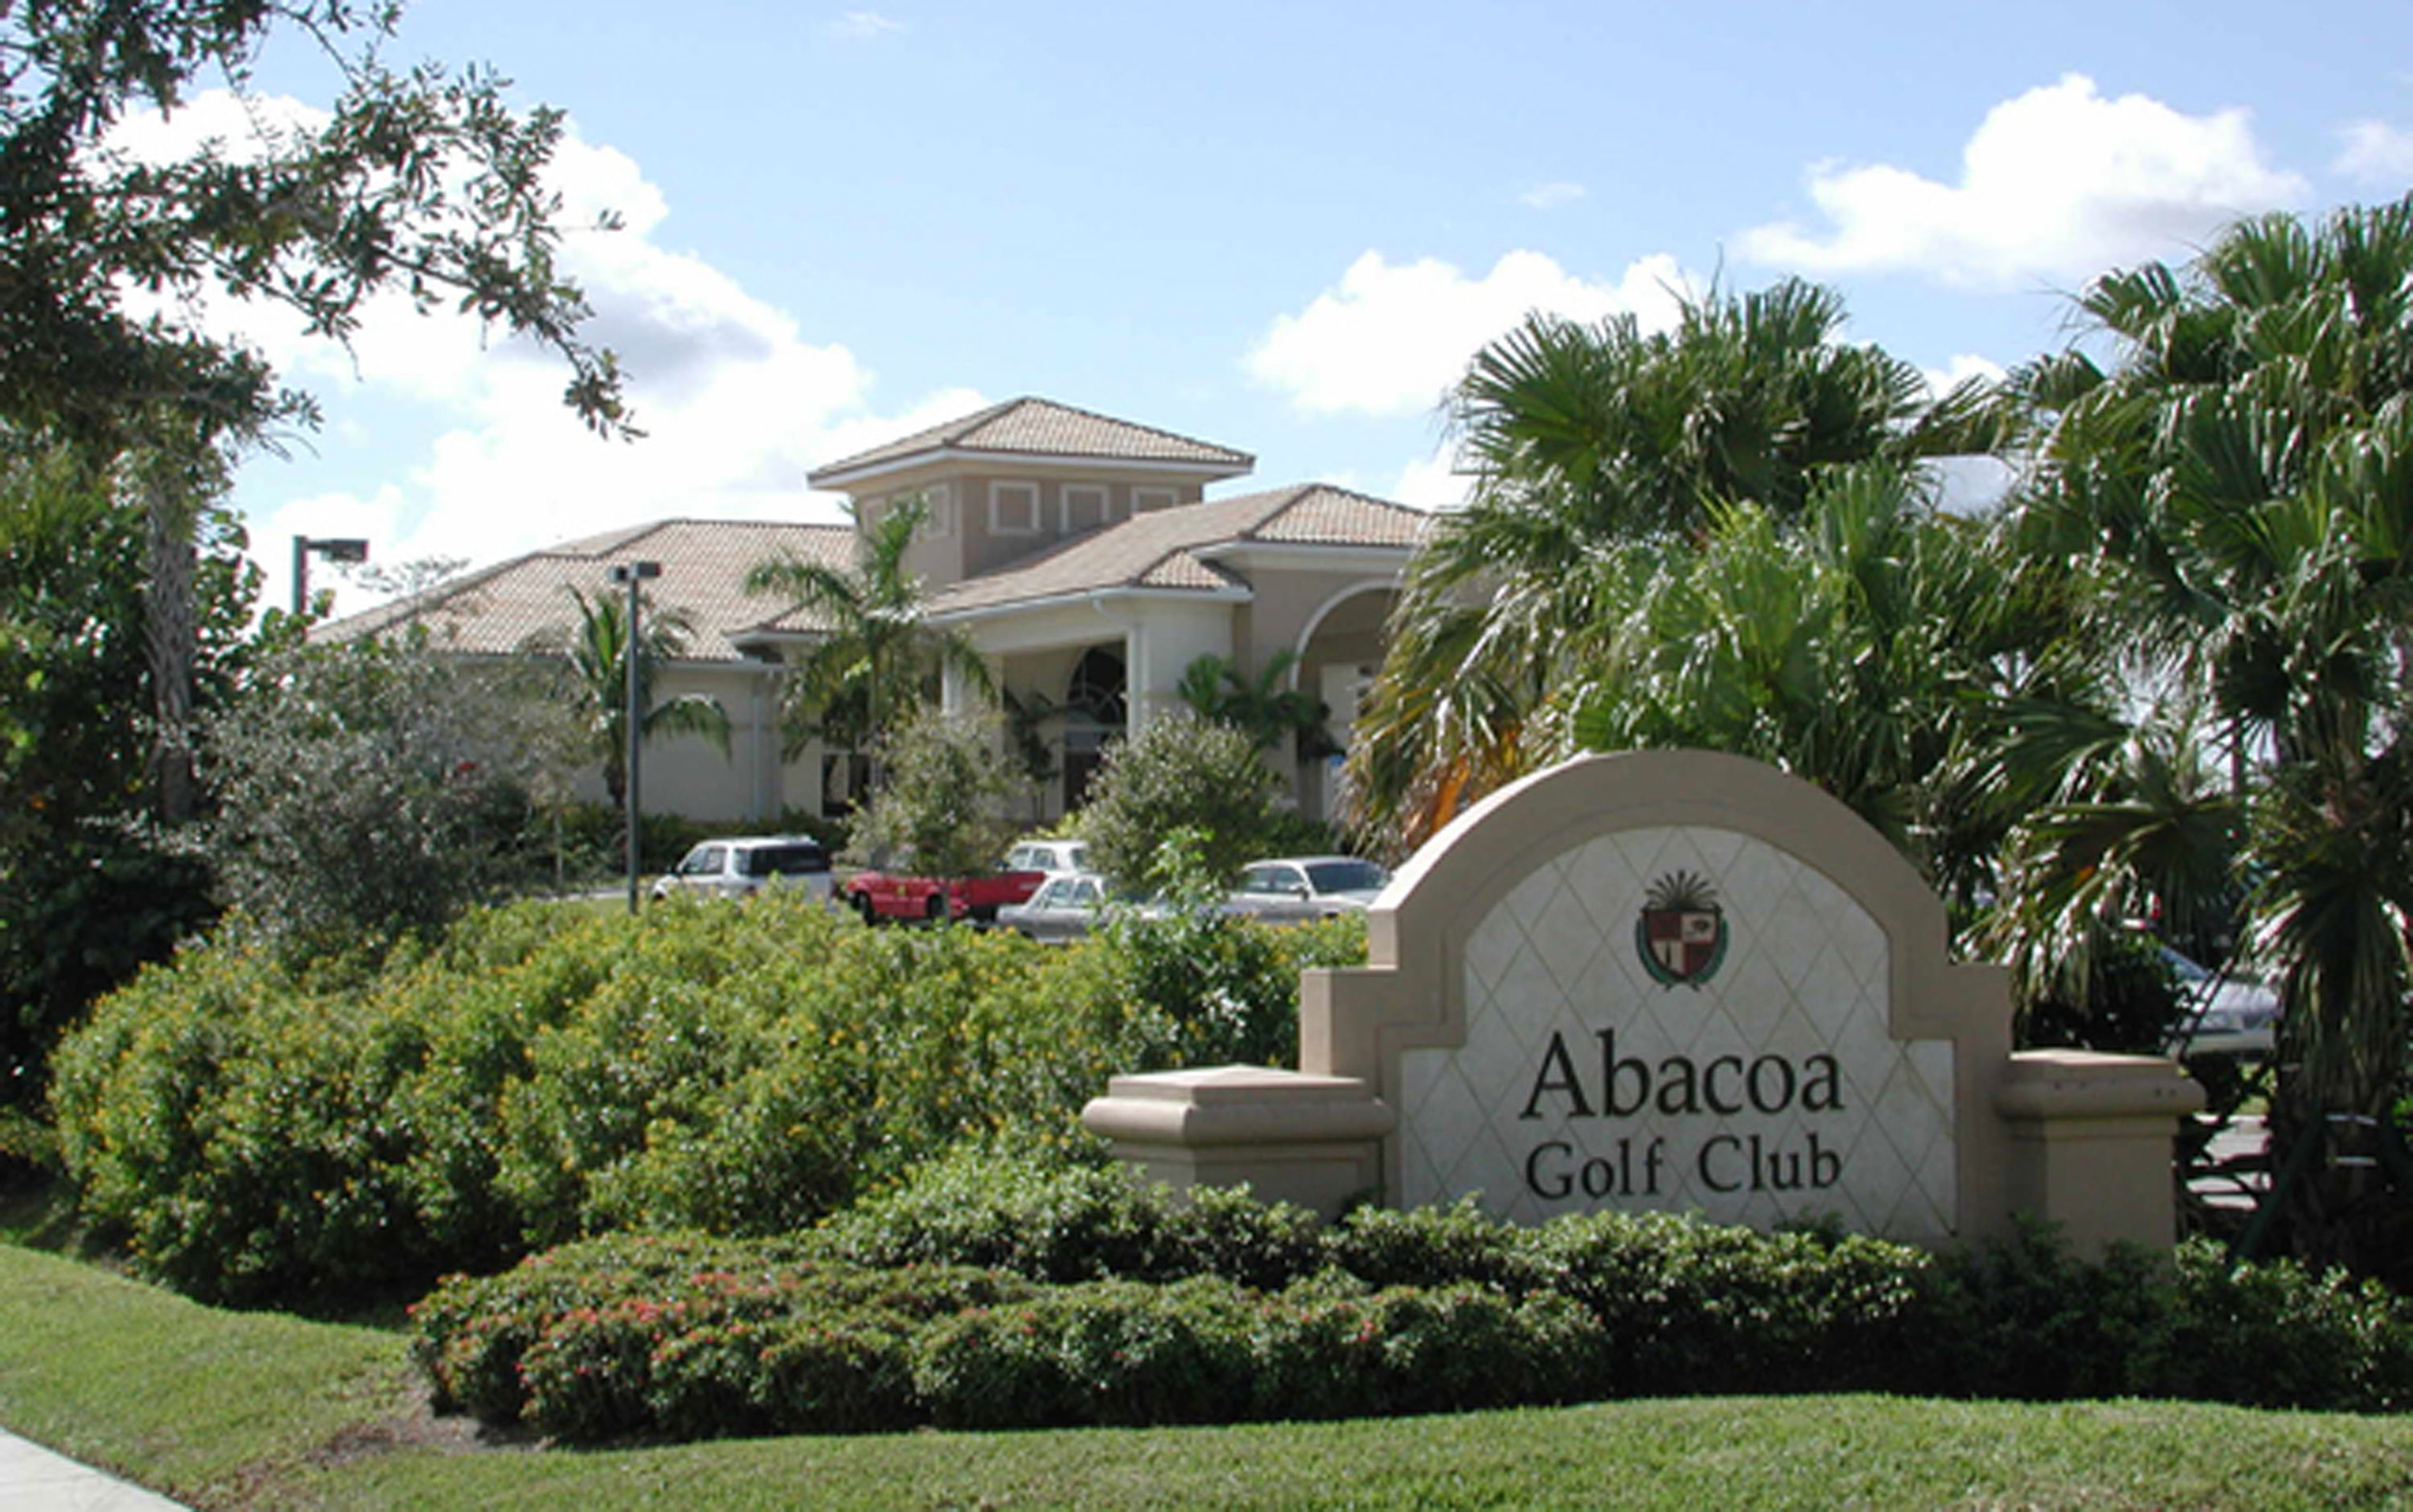 Abacoa Golf Clubhouse Jupiter Florida Entry Sign.jpg